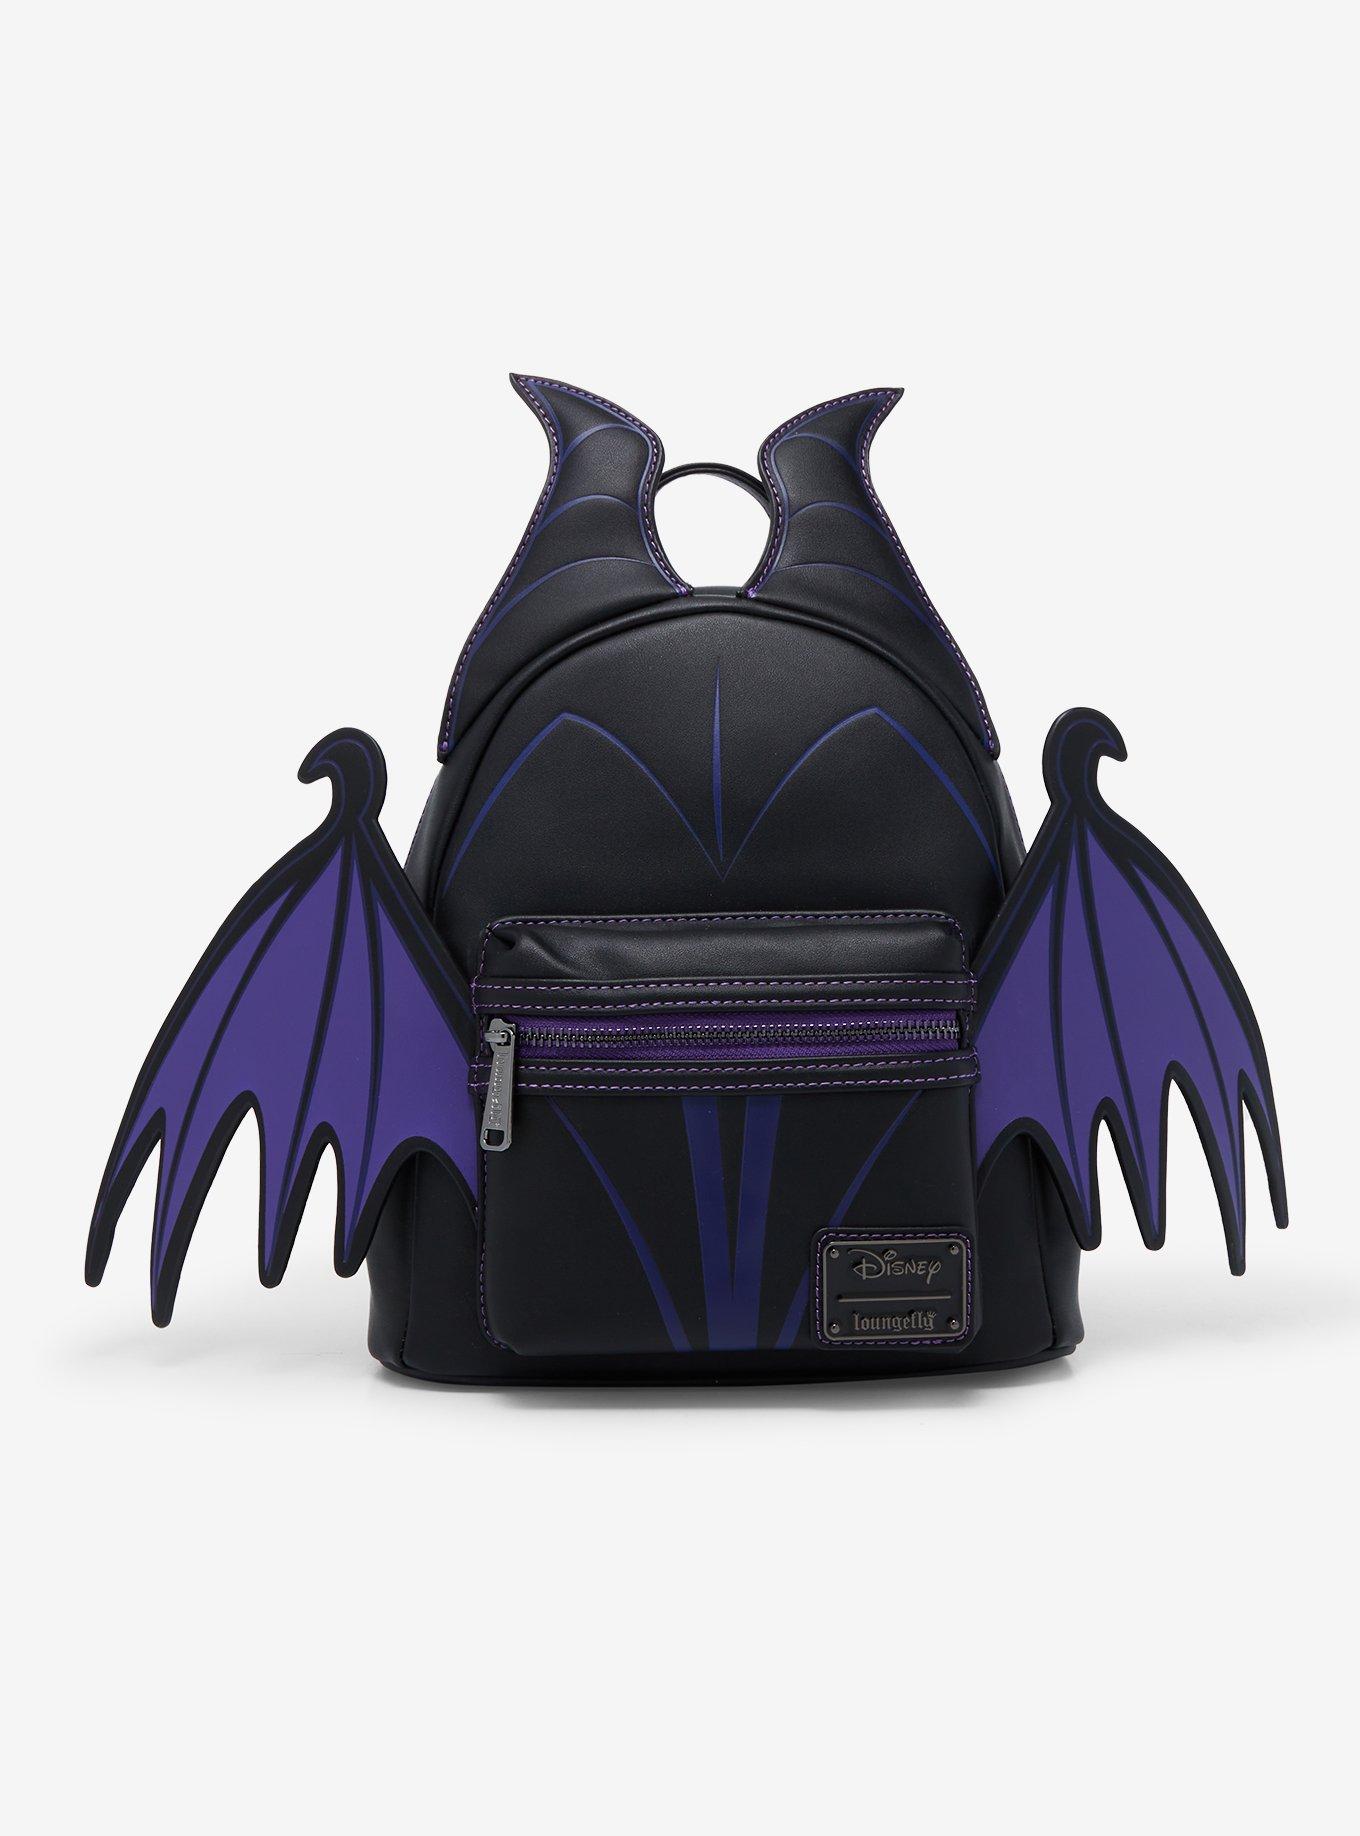 DISNEY - Beauty and the Beast Transform - Mini Backpack Loungefly :  : Bag Loungefly DISNEY